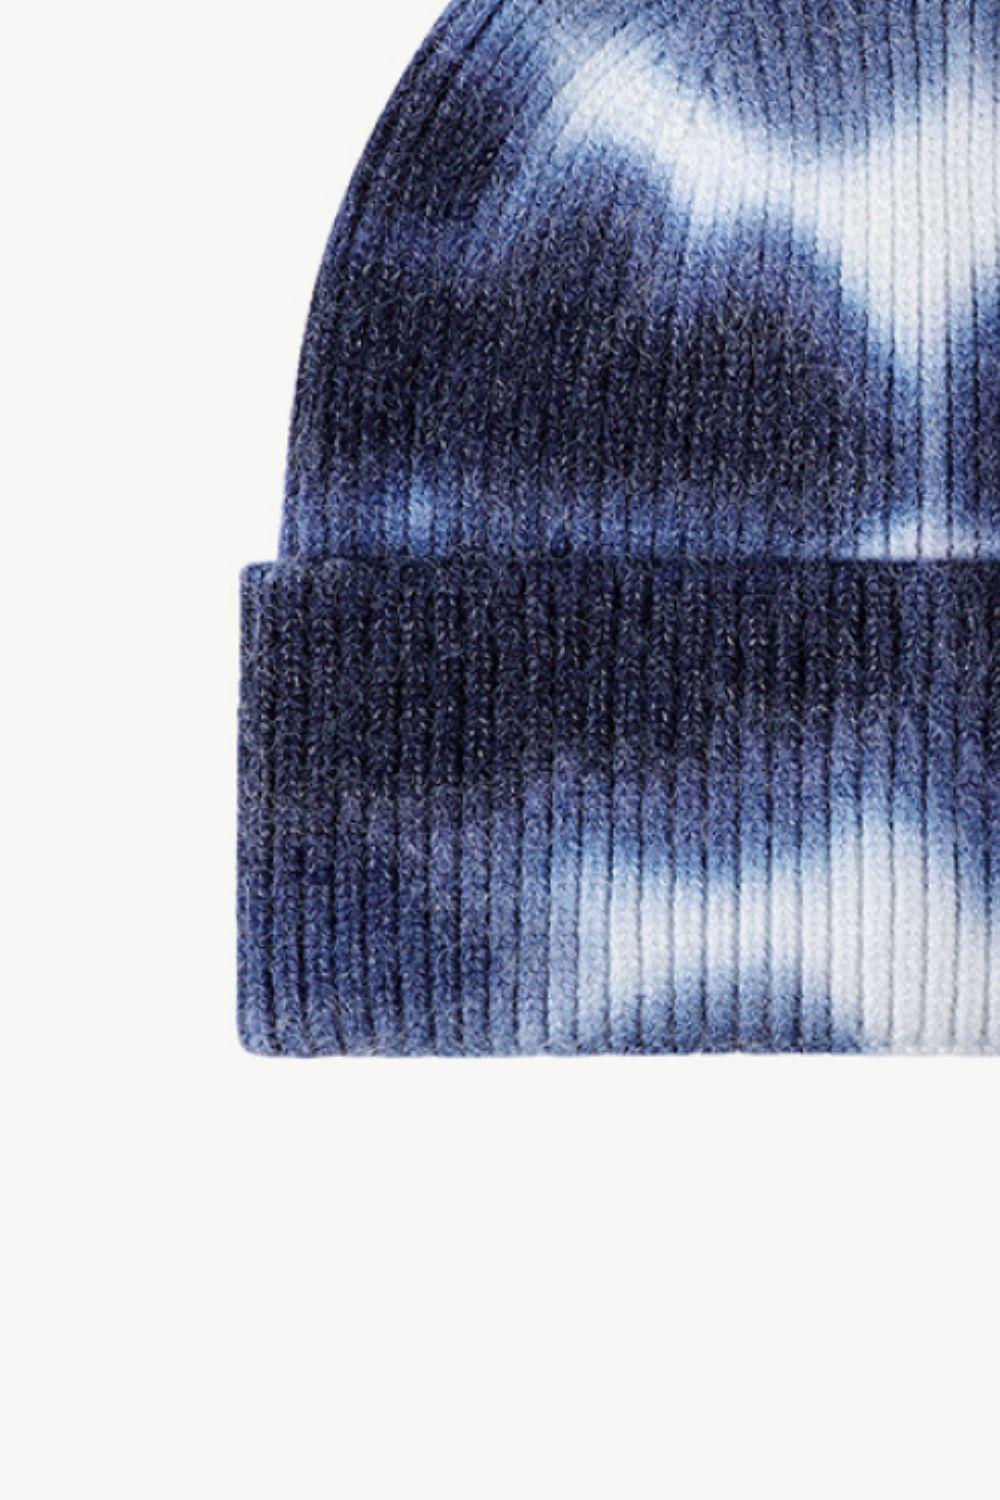 Tie-Dye Cuffed Knit Beanie BLUE ZONE PLANET